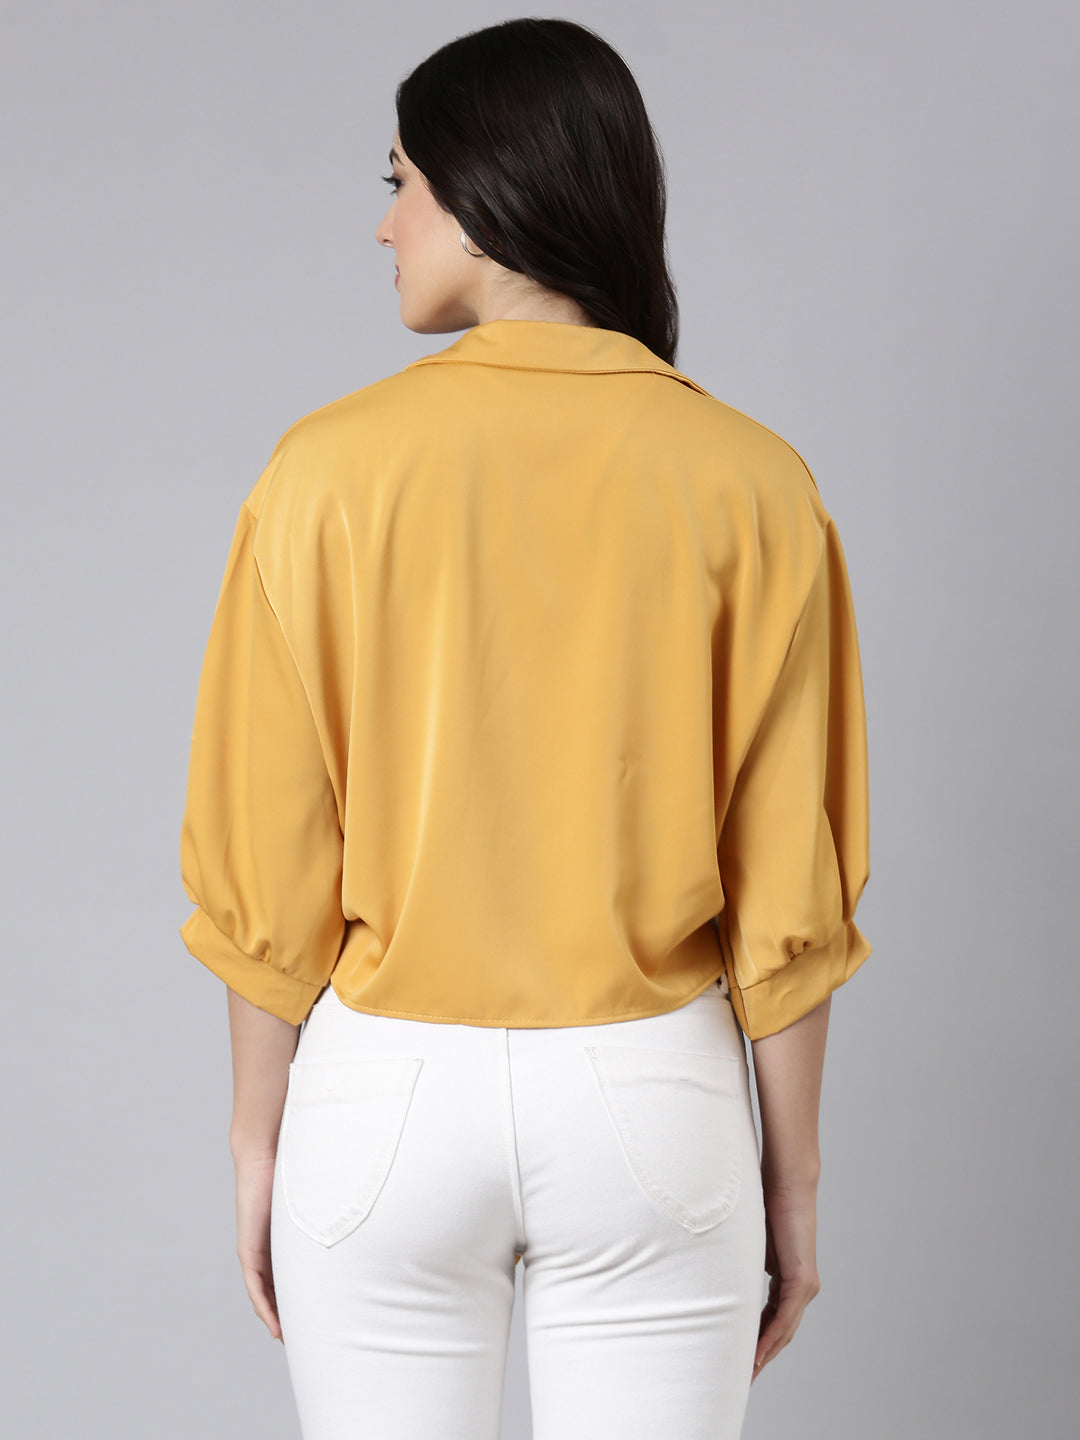 Women Solid Shirt Style Mustard Top